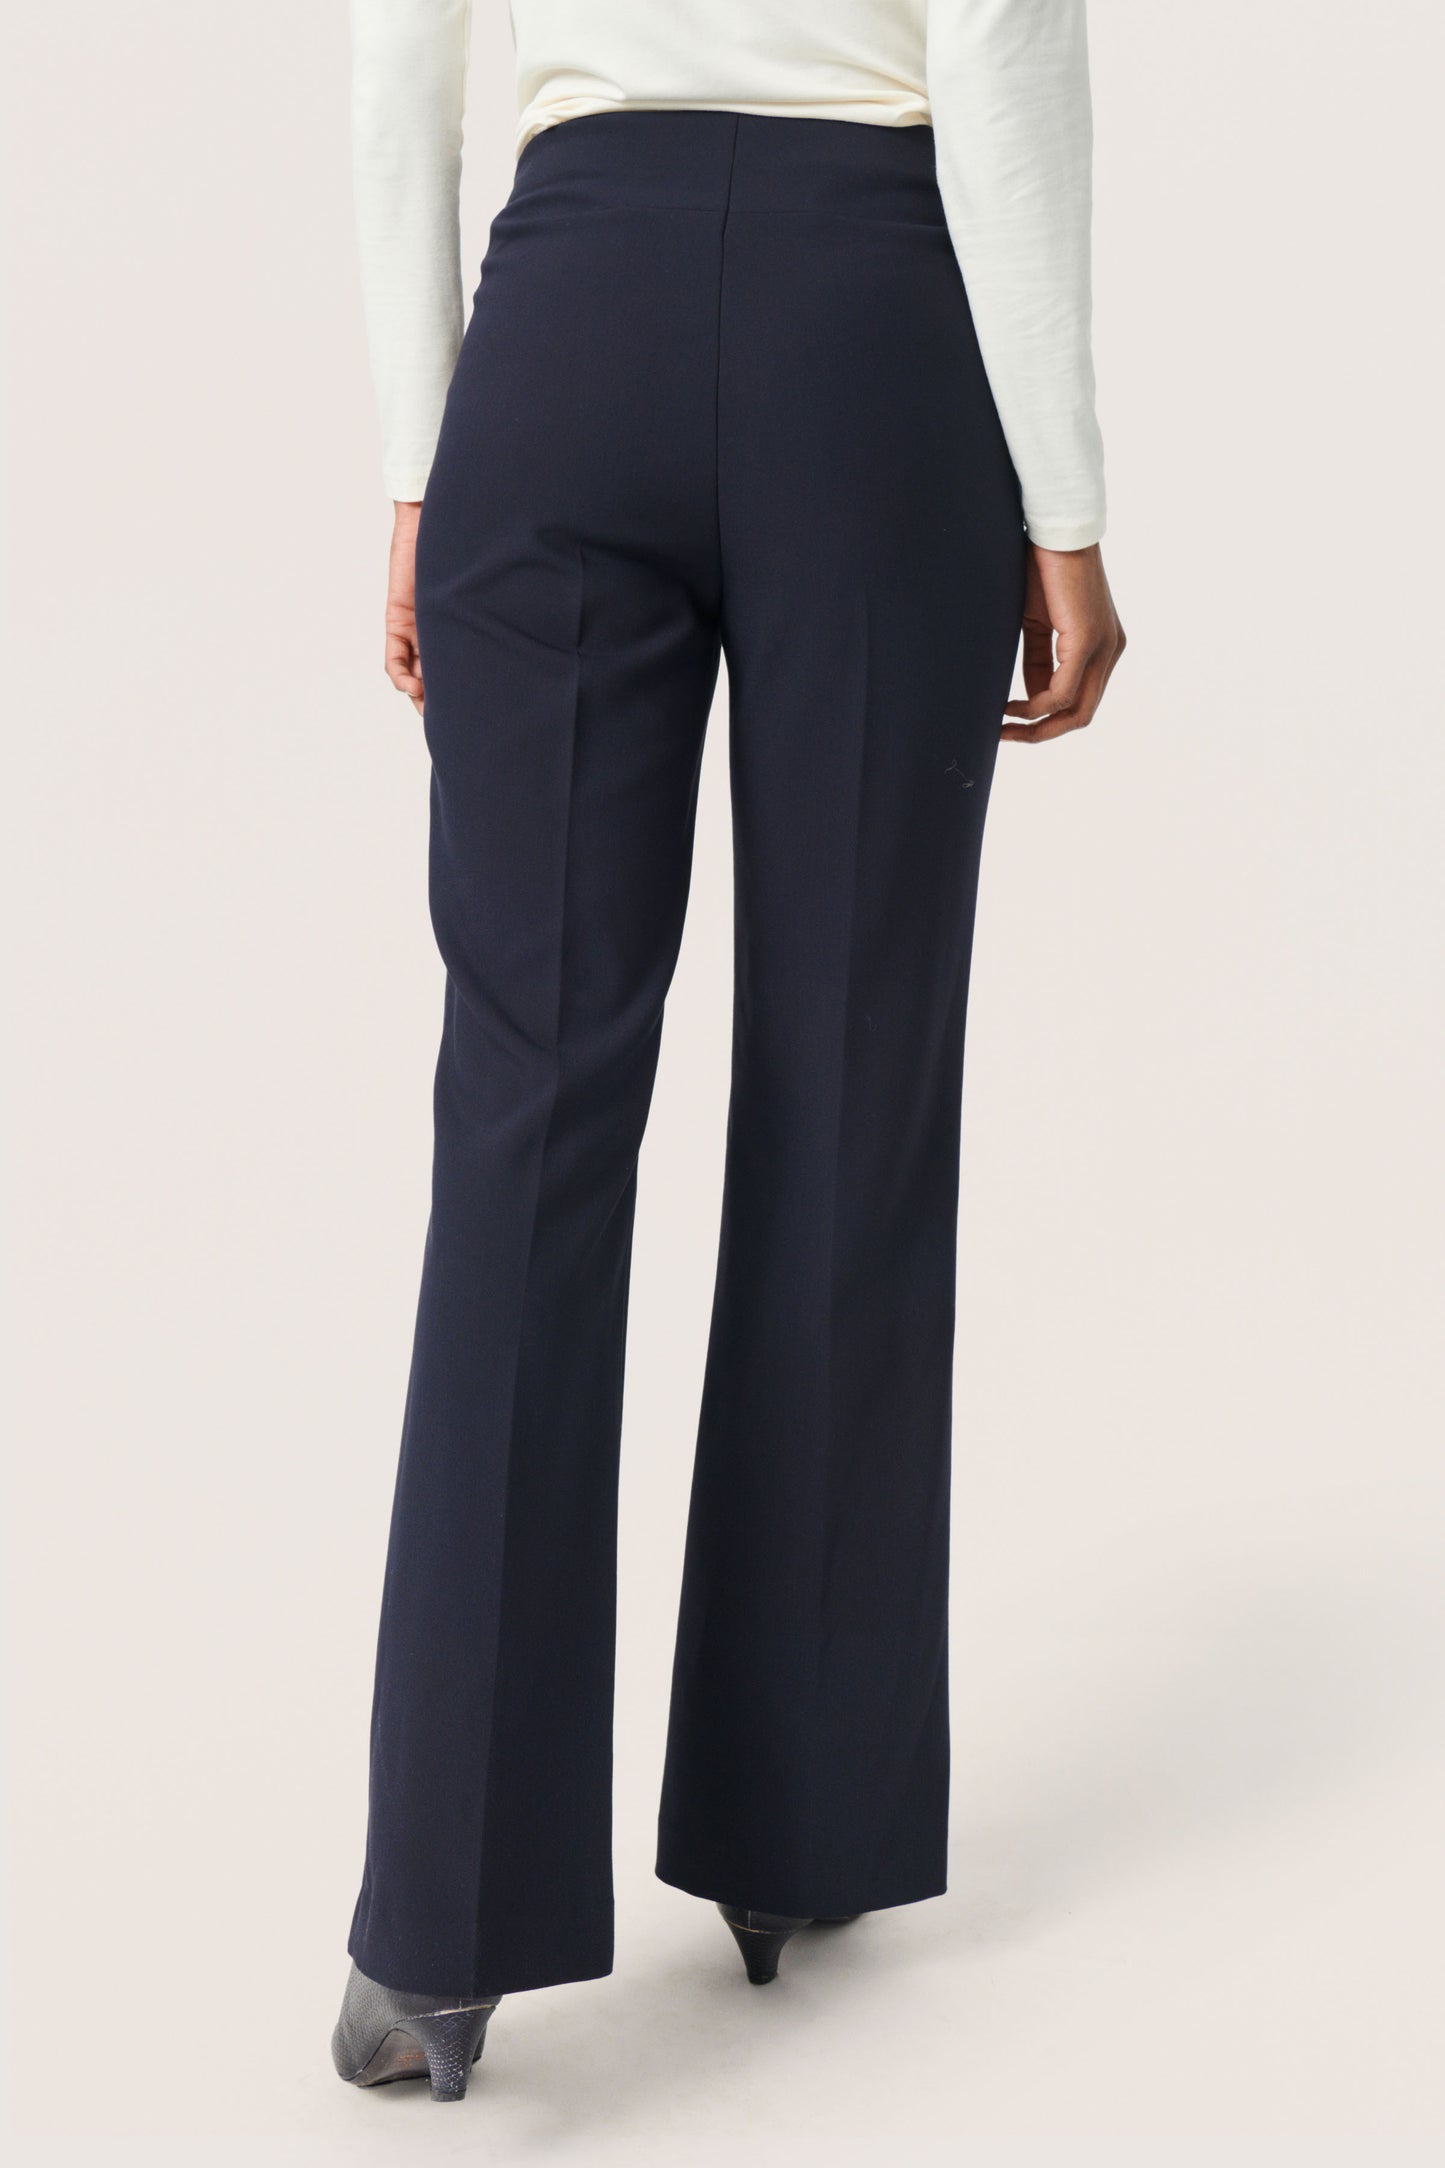 Corinne Classic Navy Trouser